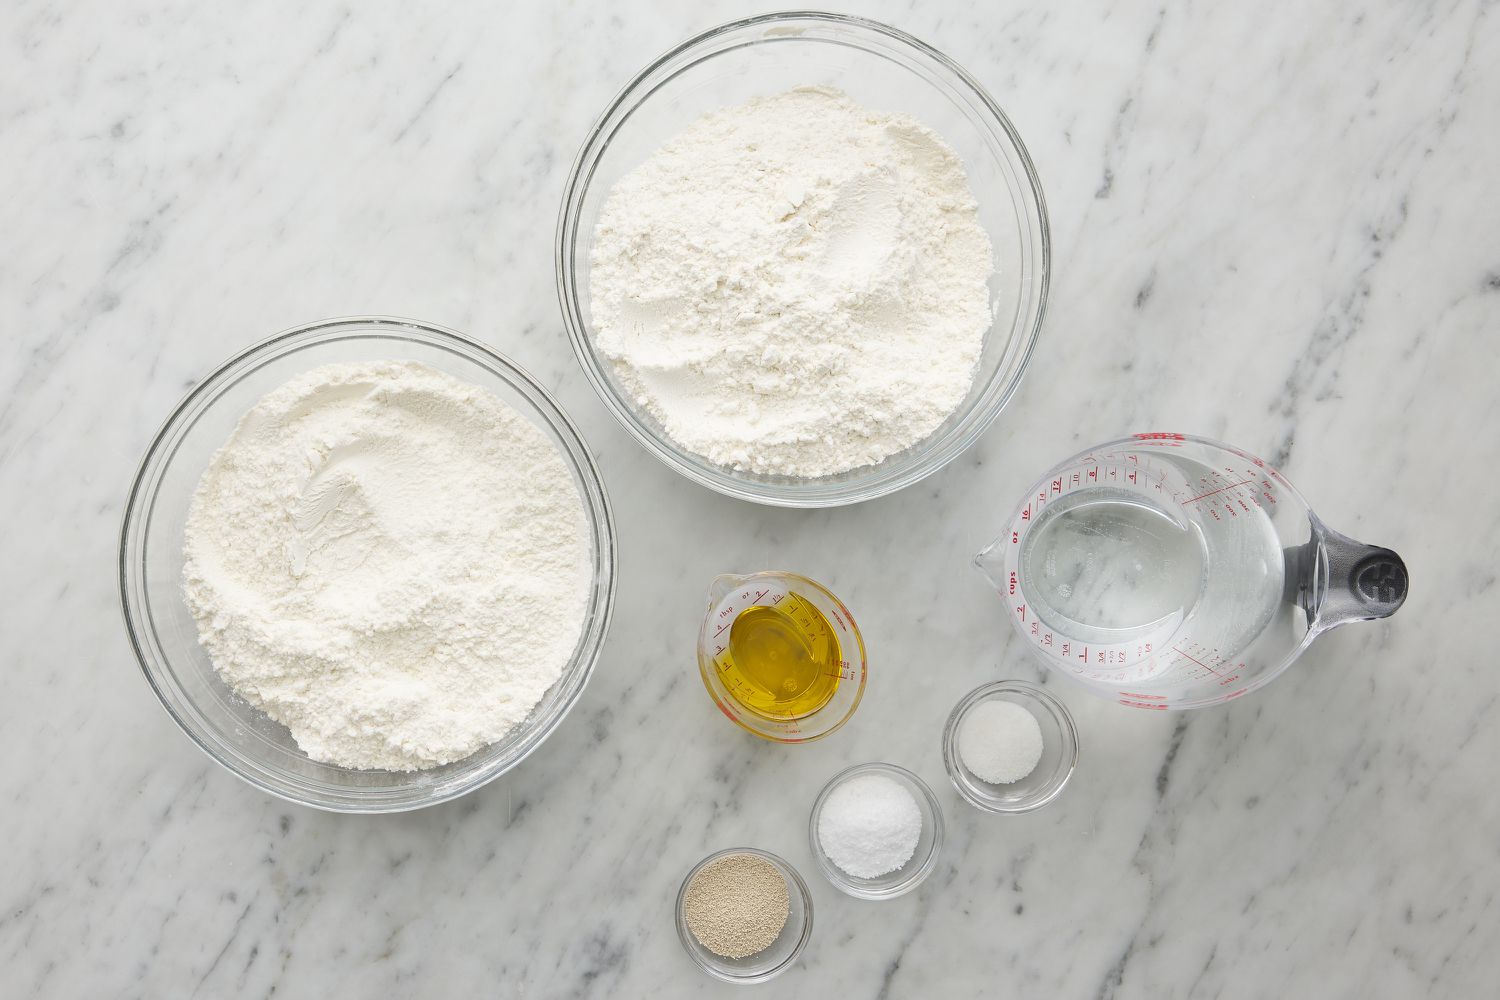 calzone dough ingredients